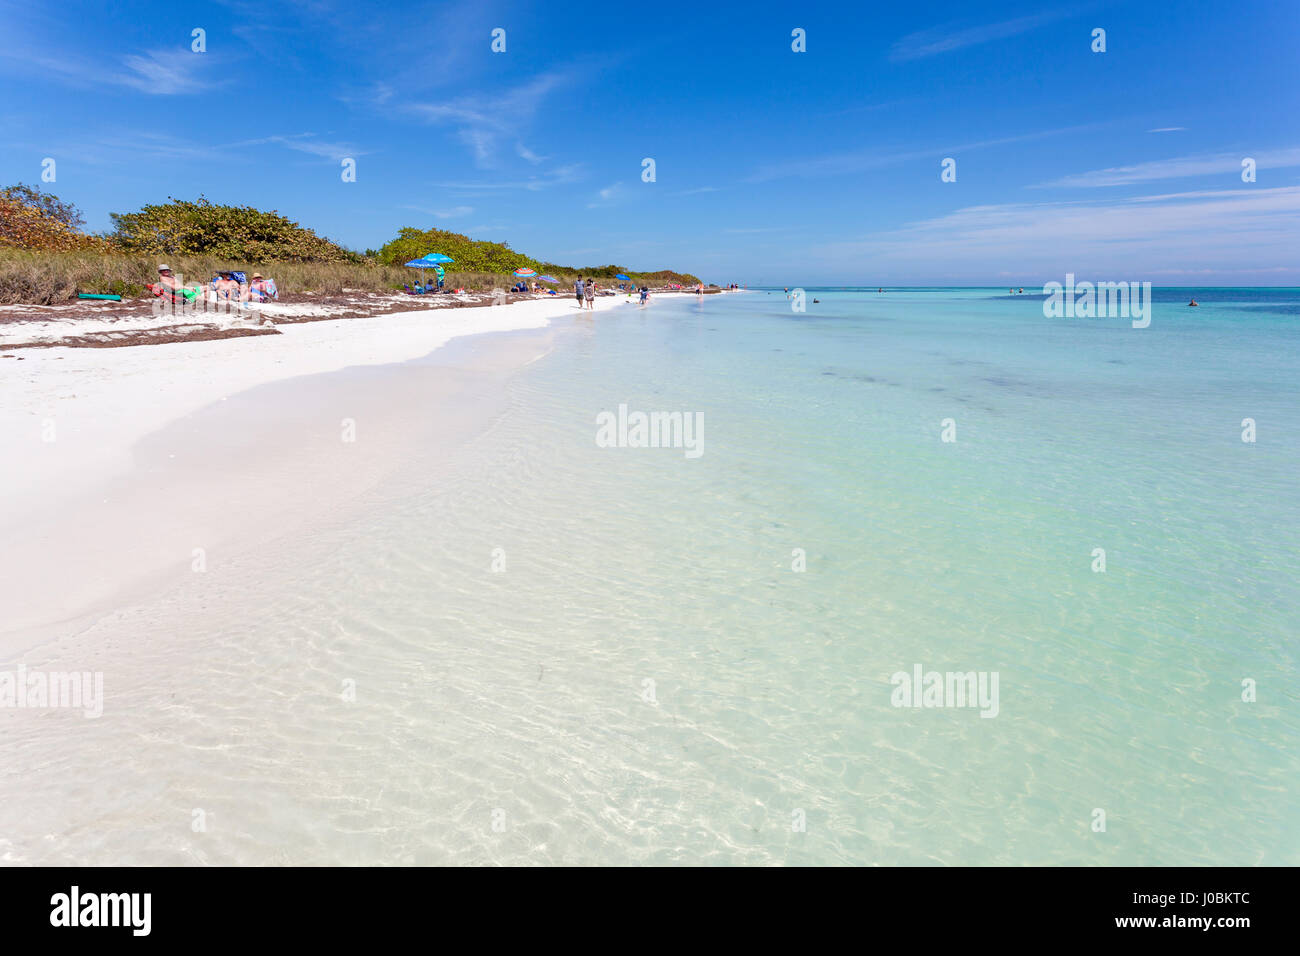 Bahia Honda, FL, USA - Le 16 mars 2017 : Très belle plage de sable blanc du Bahia Honda key state park. Florida Keys, United States Banque D'Images